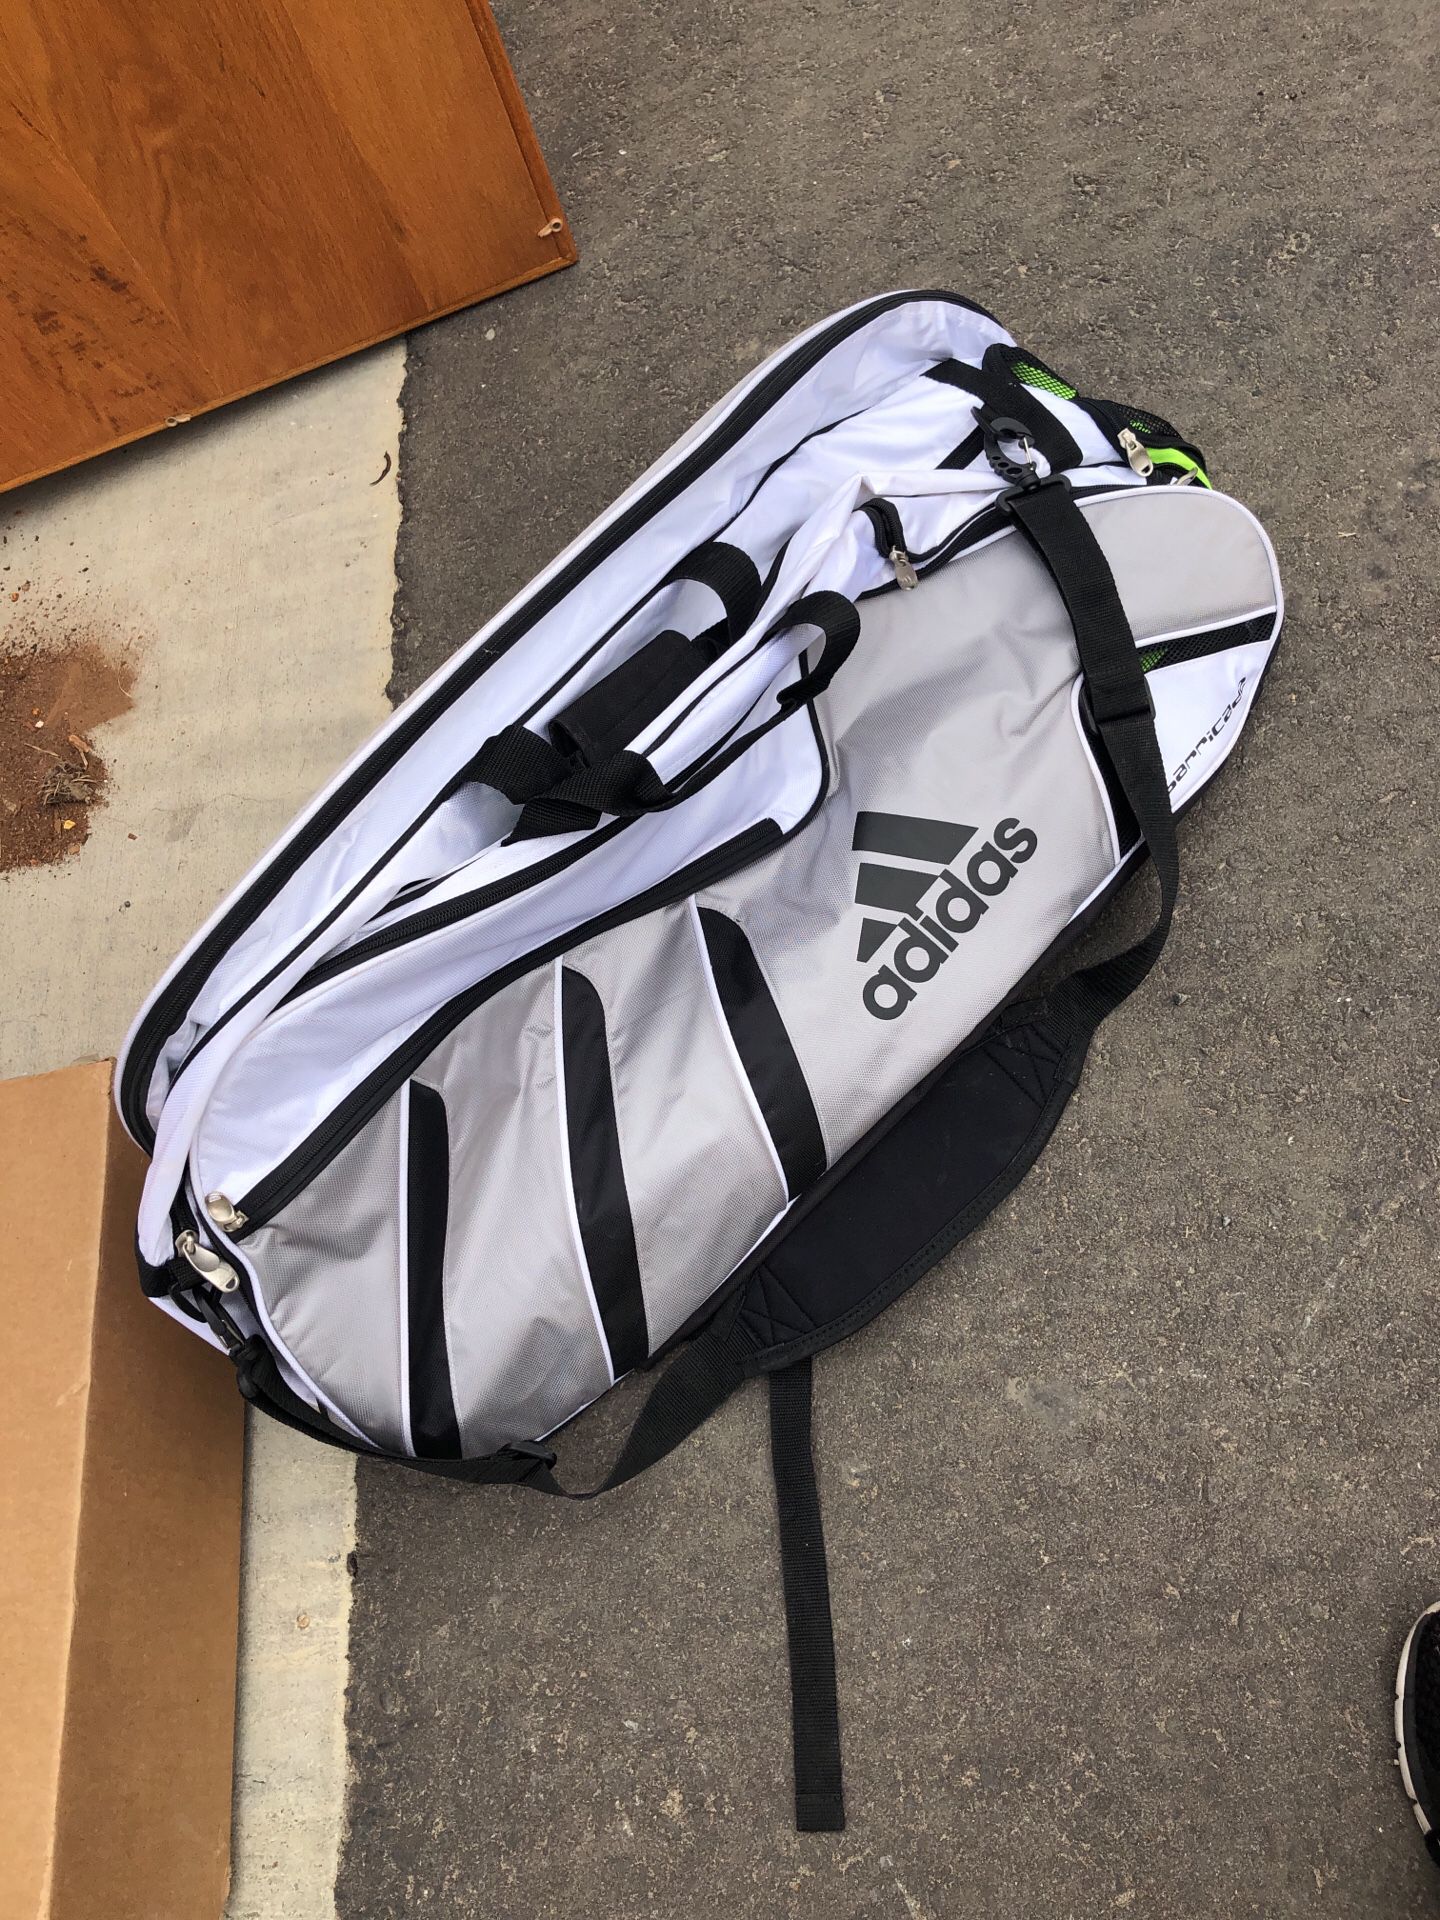 6 racket adidas tennis bag